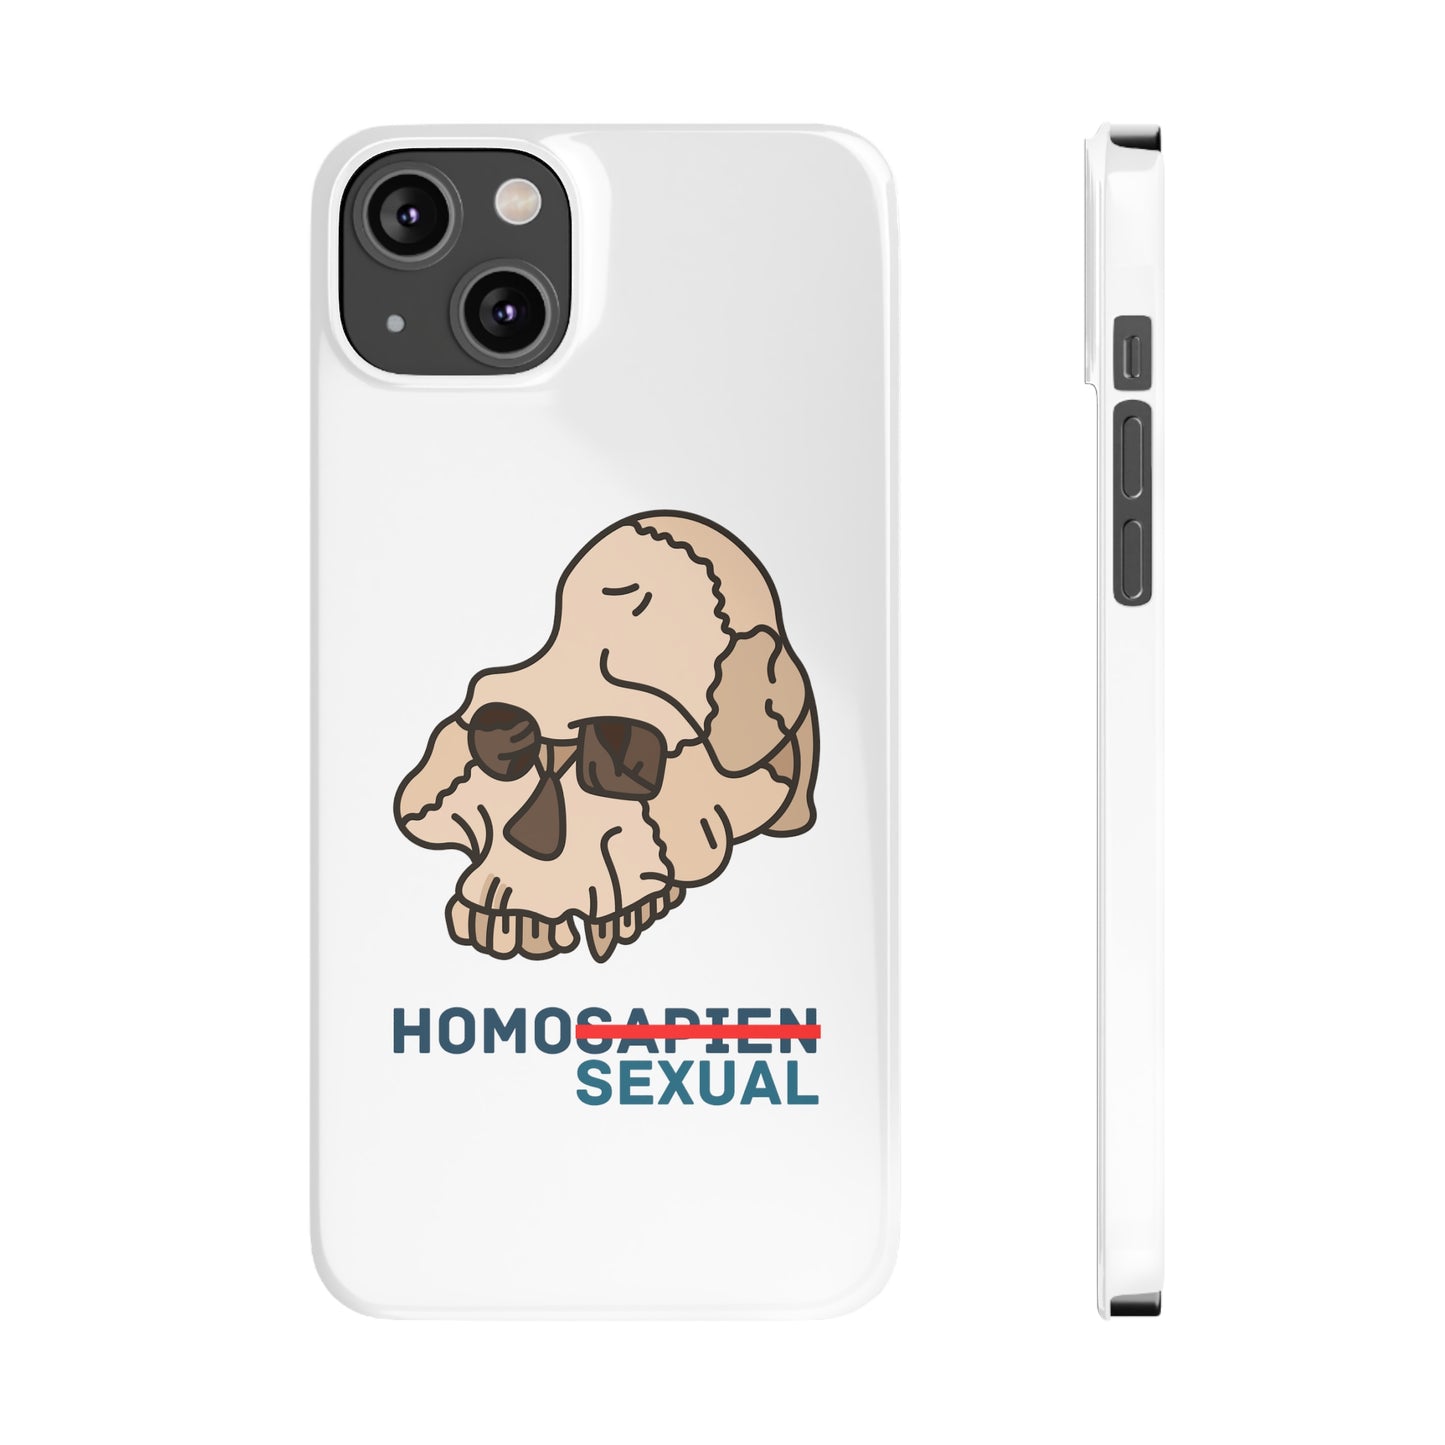 Homosapien iPhone Case